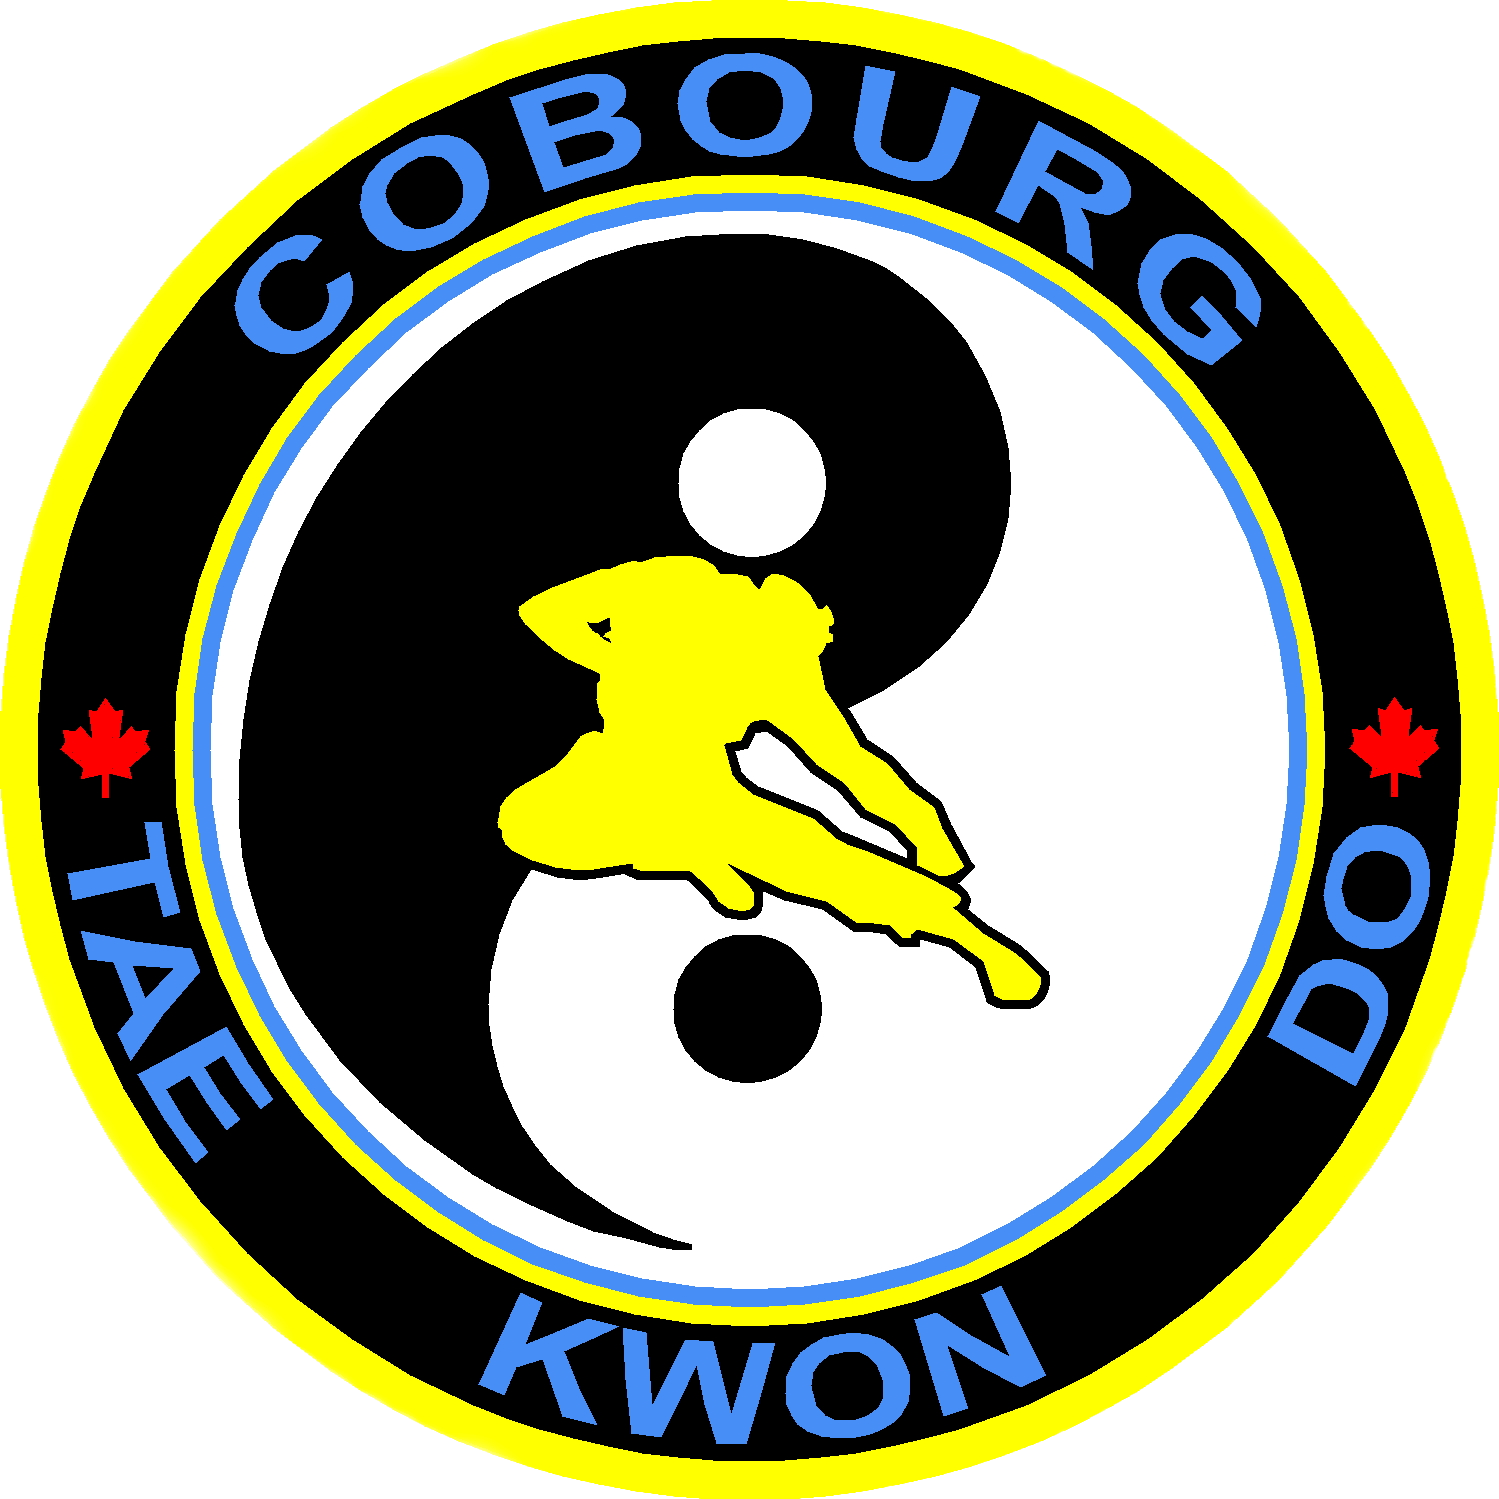 Cobourg Tae Kwon Do - Cobourg Tae Kwon Do (1499x1499)